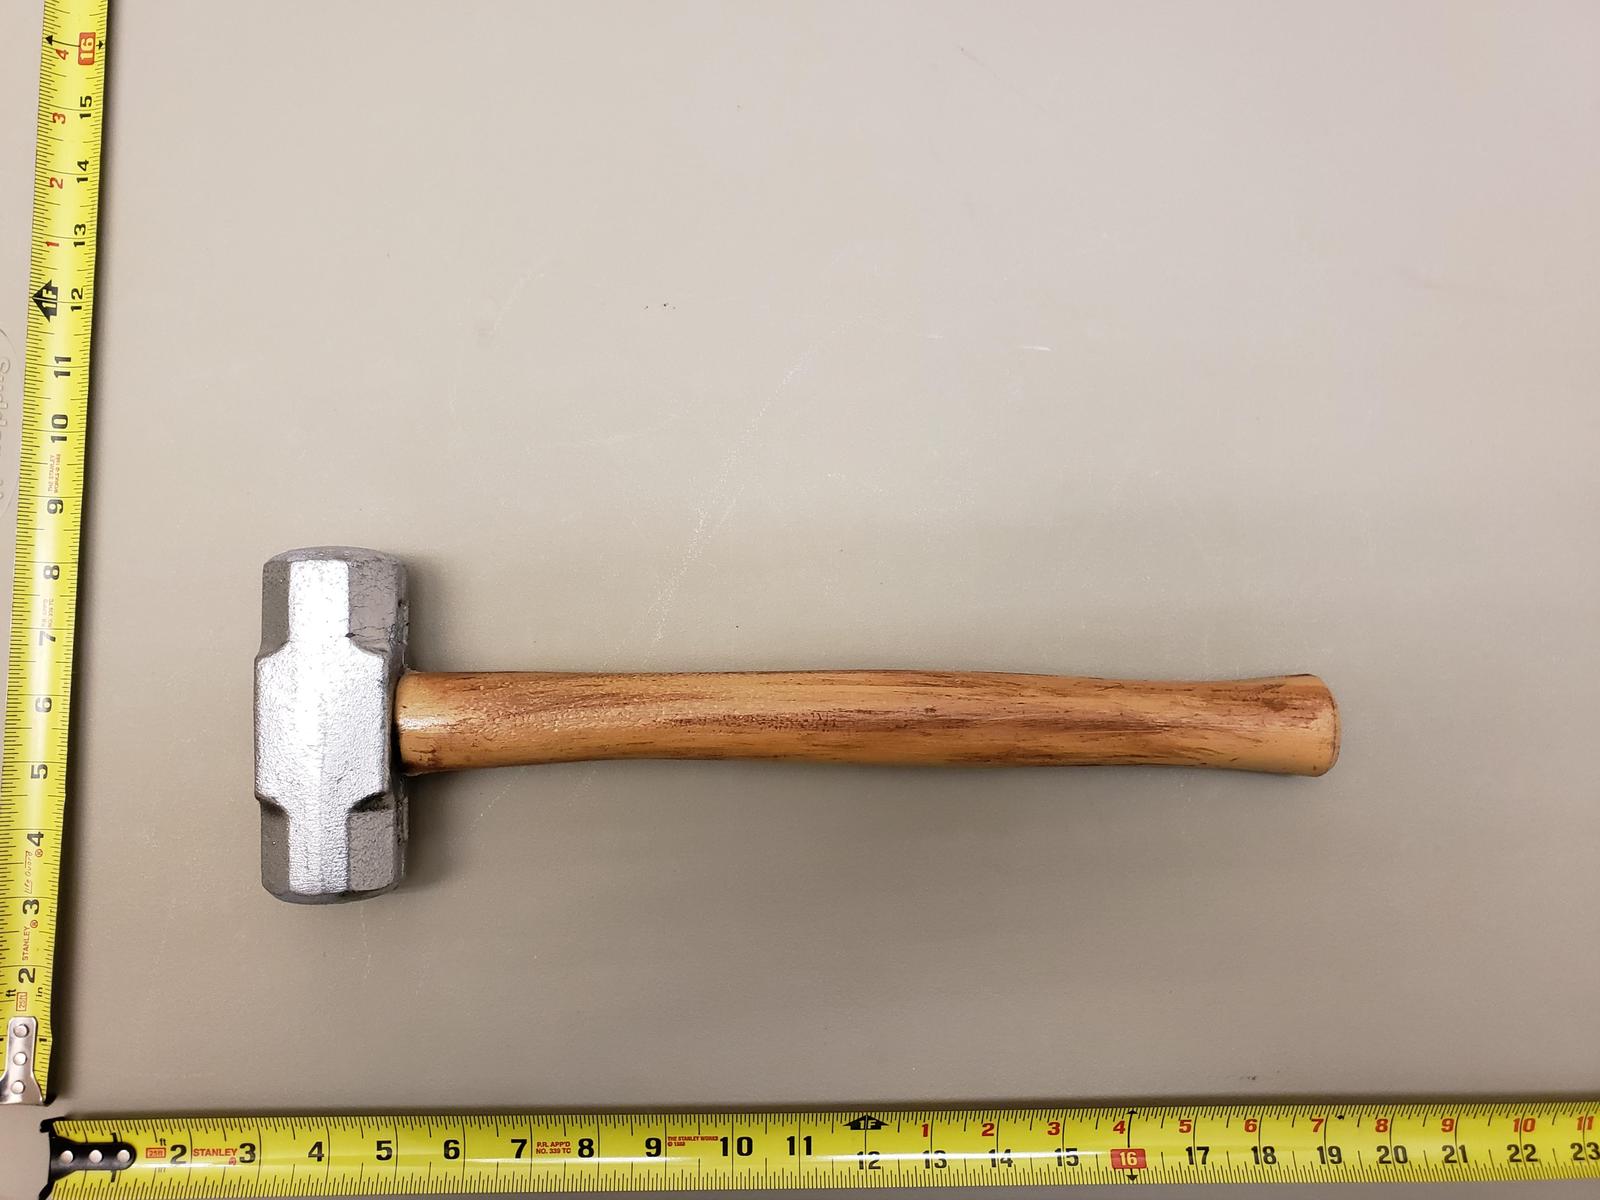 Small Sledgehammer, Foam Rubber